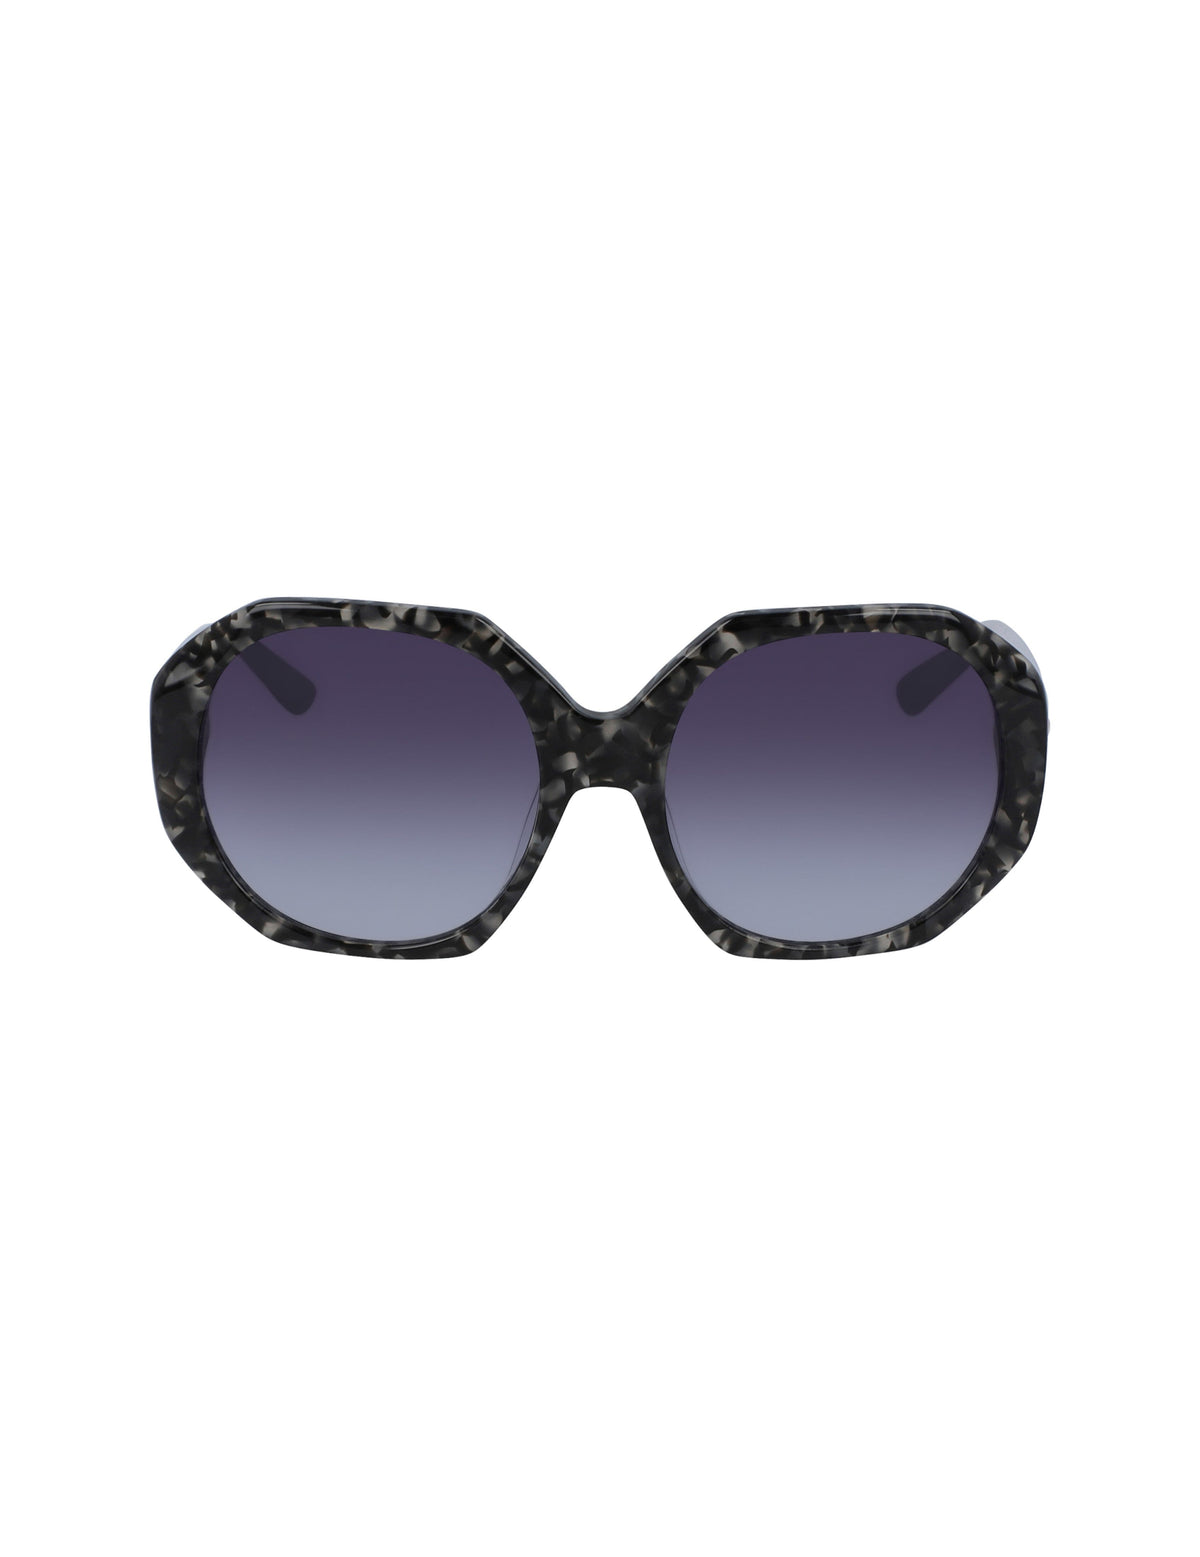 Anne Klein BLACK TORTOISE Tortoise Geometric Oversized Sunglasses